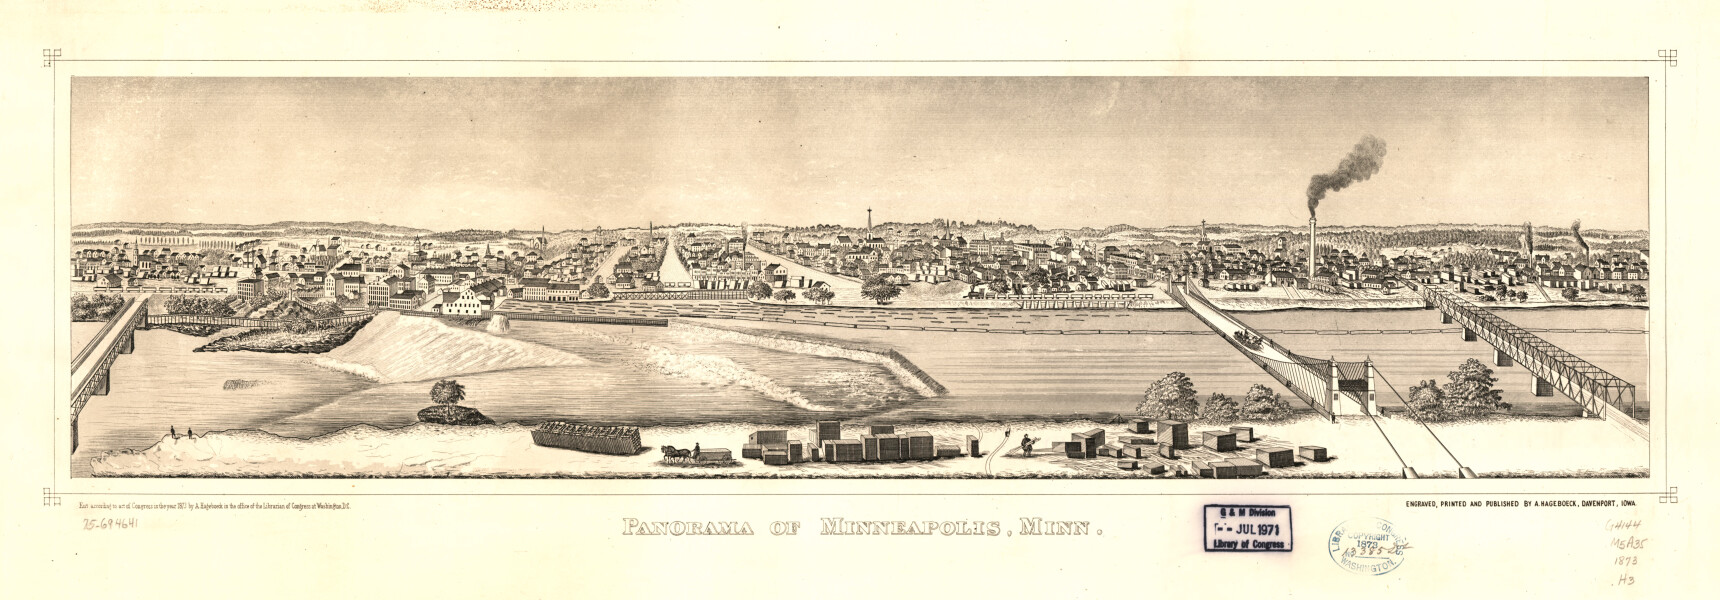 E66 - Panorama of Minneapolis Minnesota - 1873